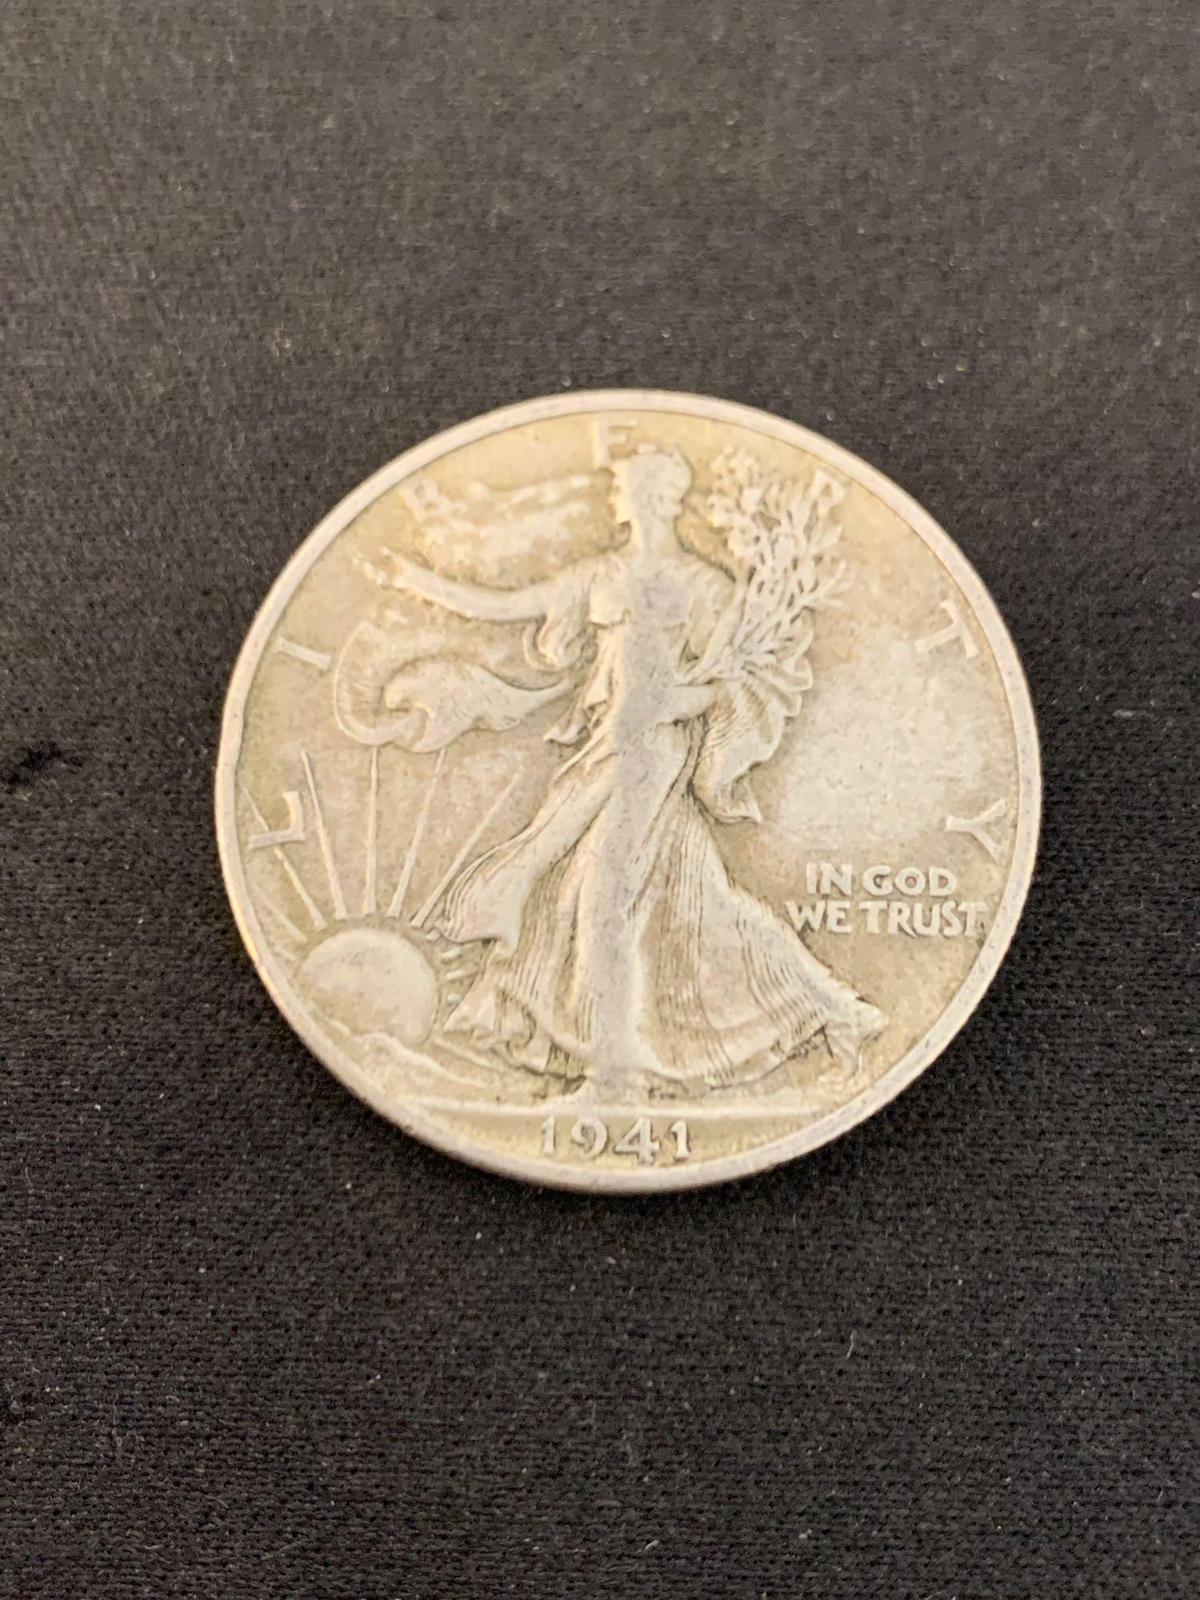 1941-S United States Walking Liberty Half Dollar - 90% Silver Coin